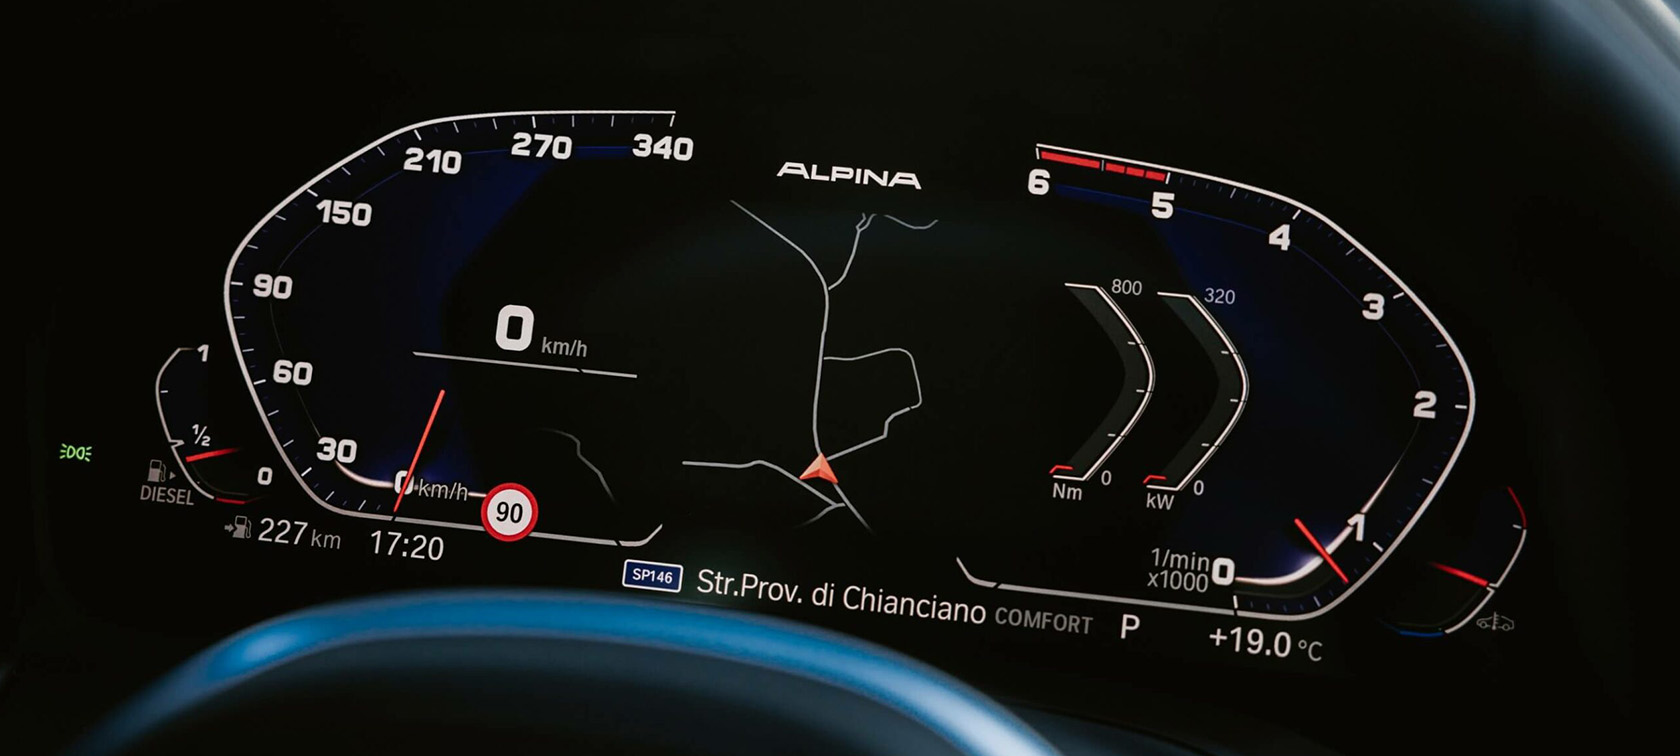 ALPINA D4 S Gran Coupe بی ام و با انبوهی از گشتاور معرفی شد